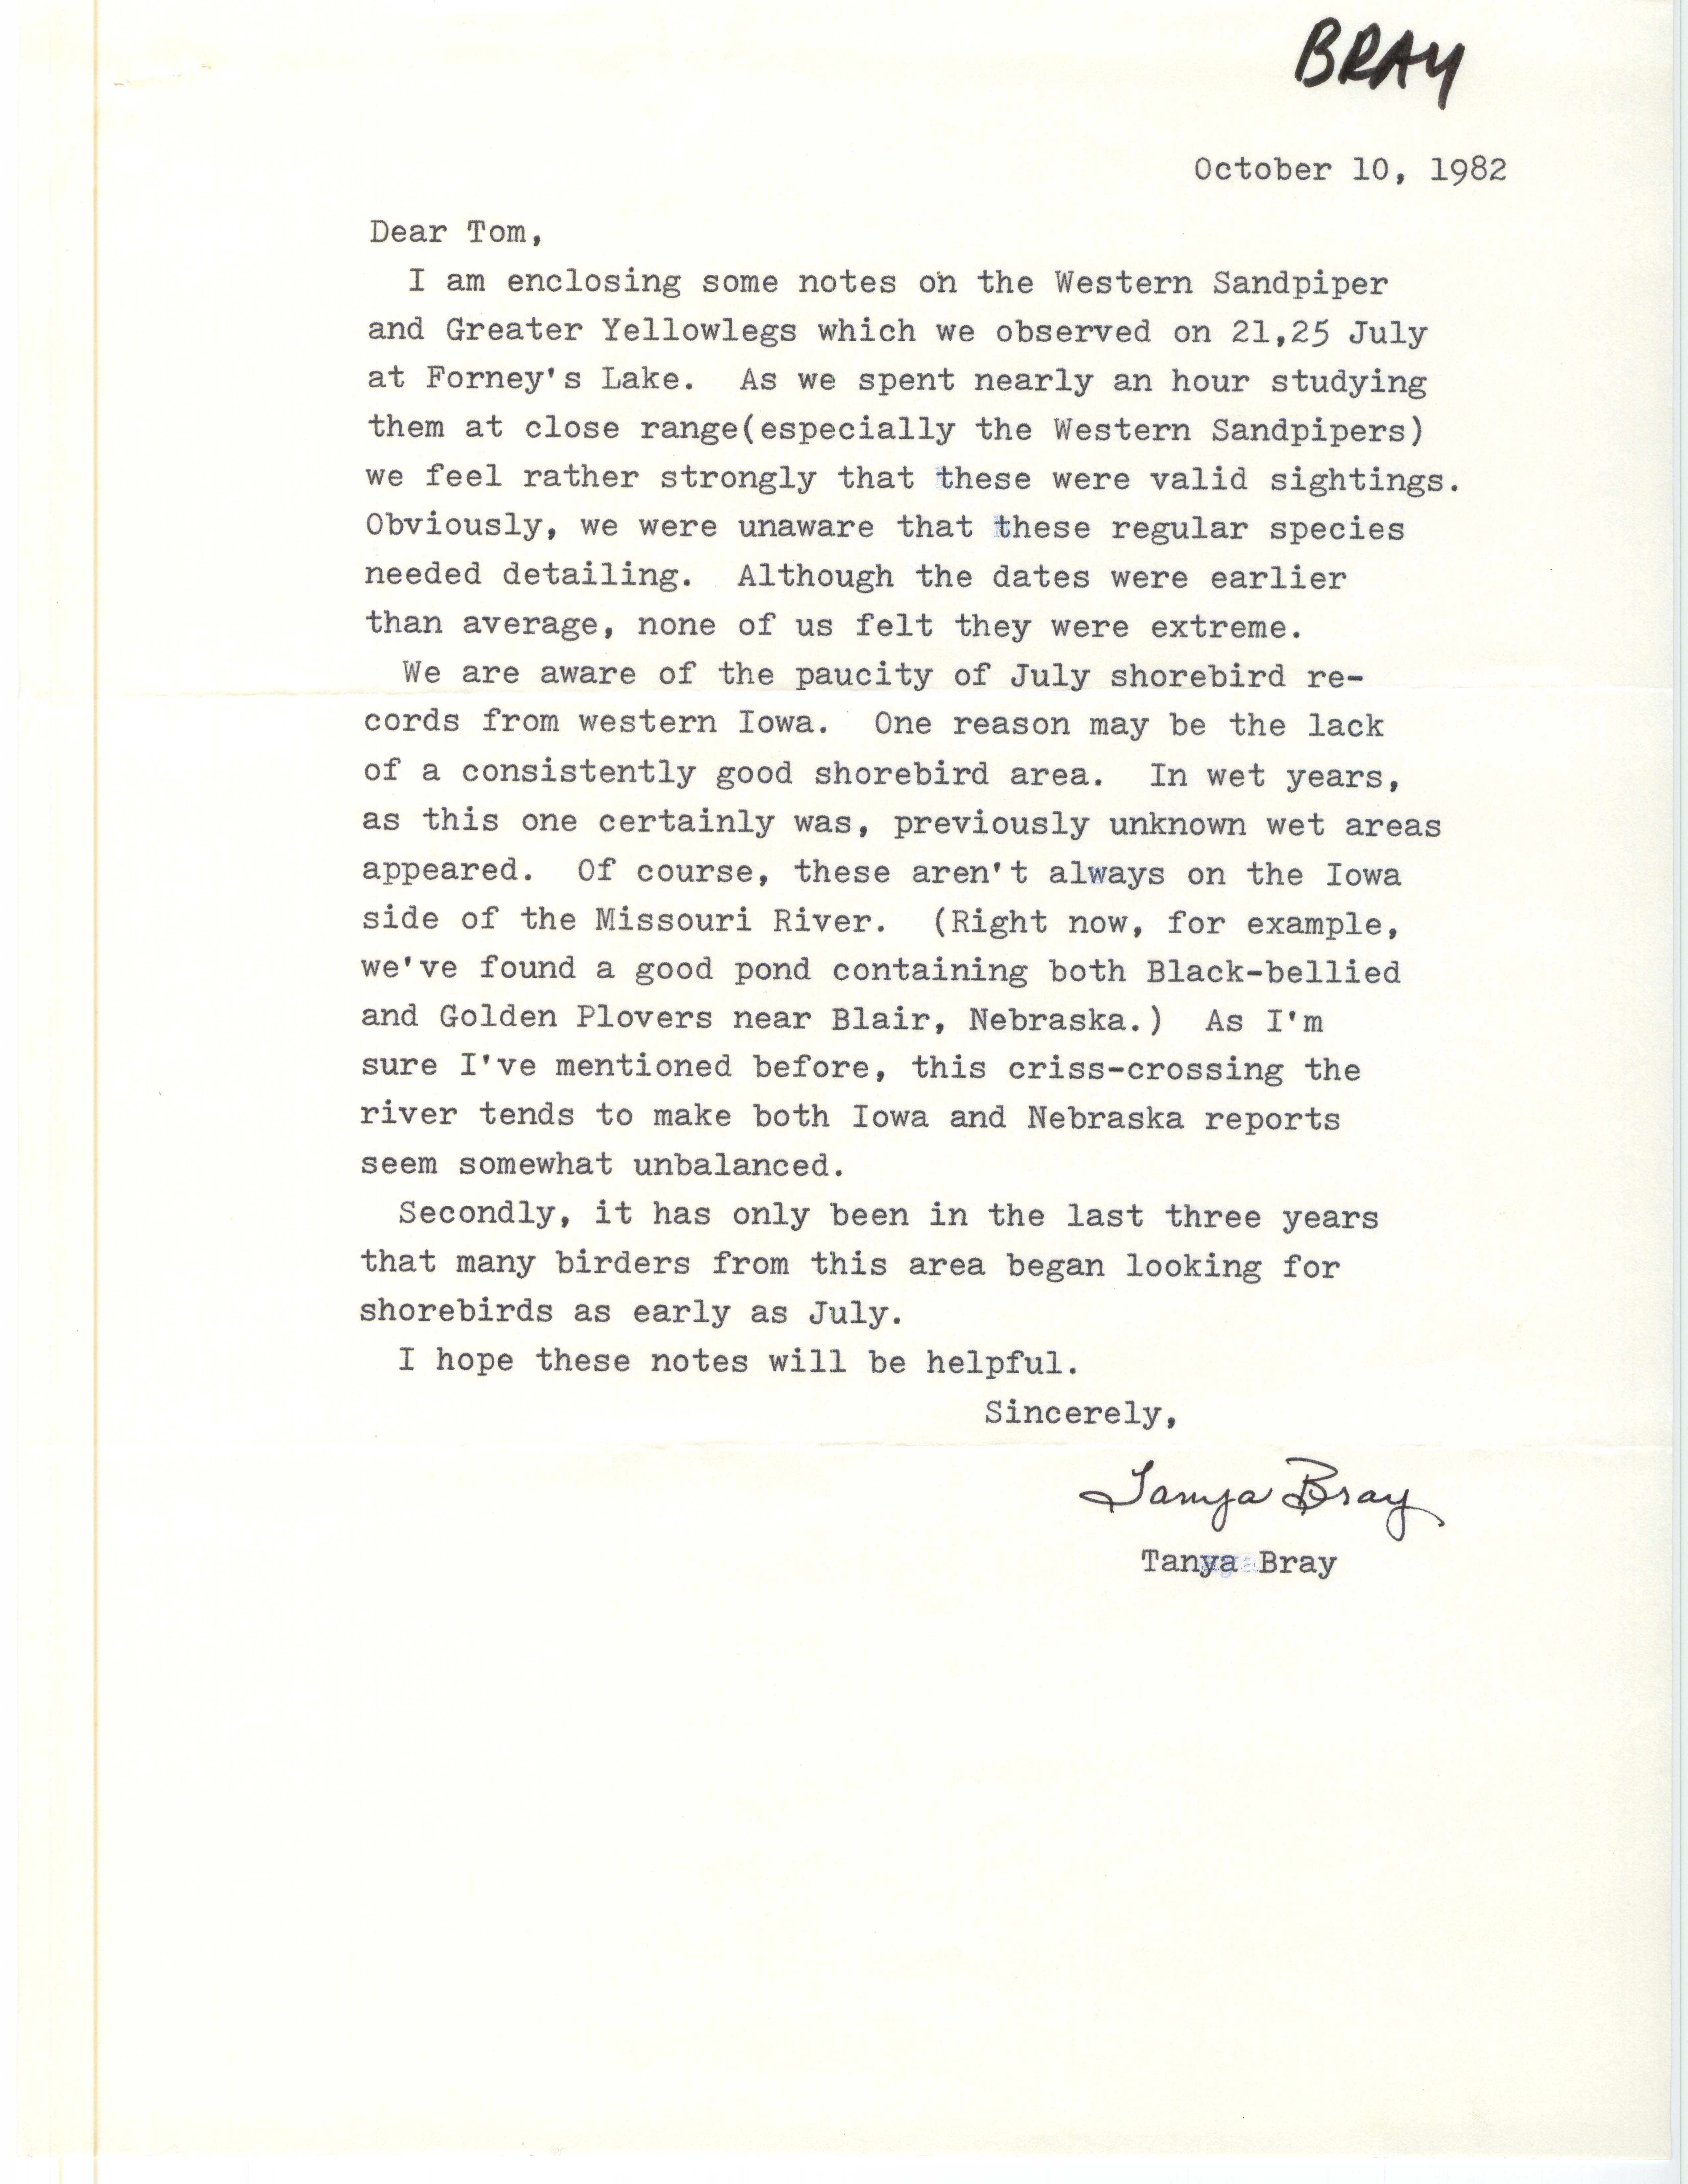 Tanya Bray letter to Thomas H. Kent regarding bird sightings, October 10, 1982